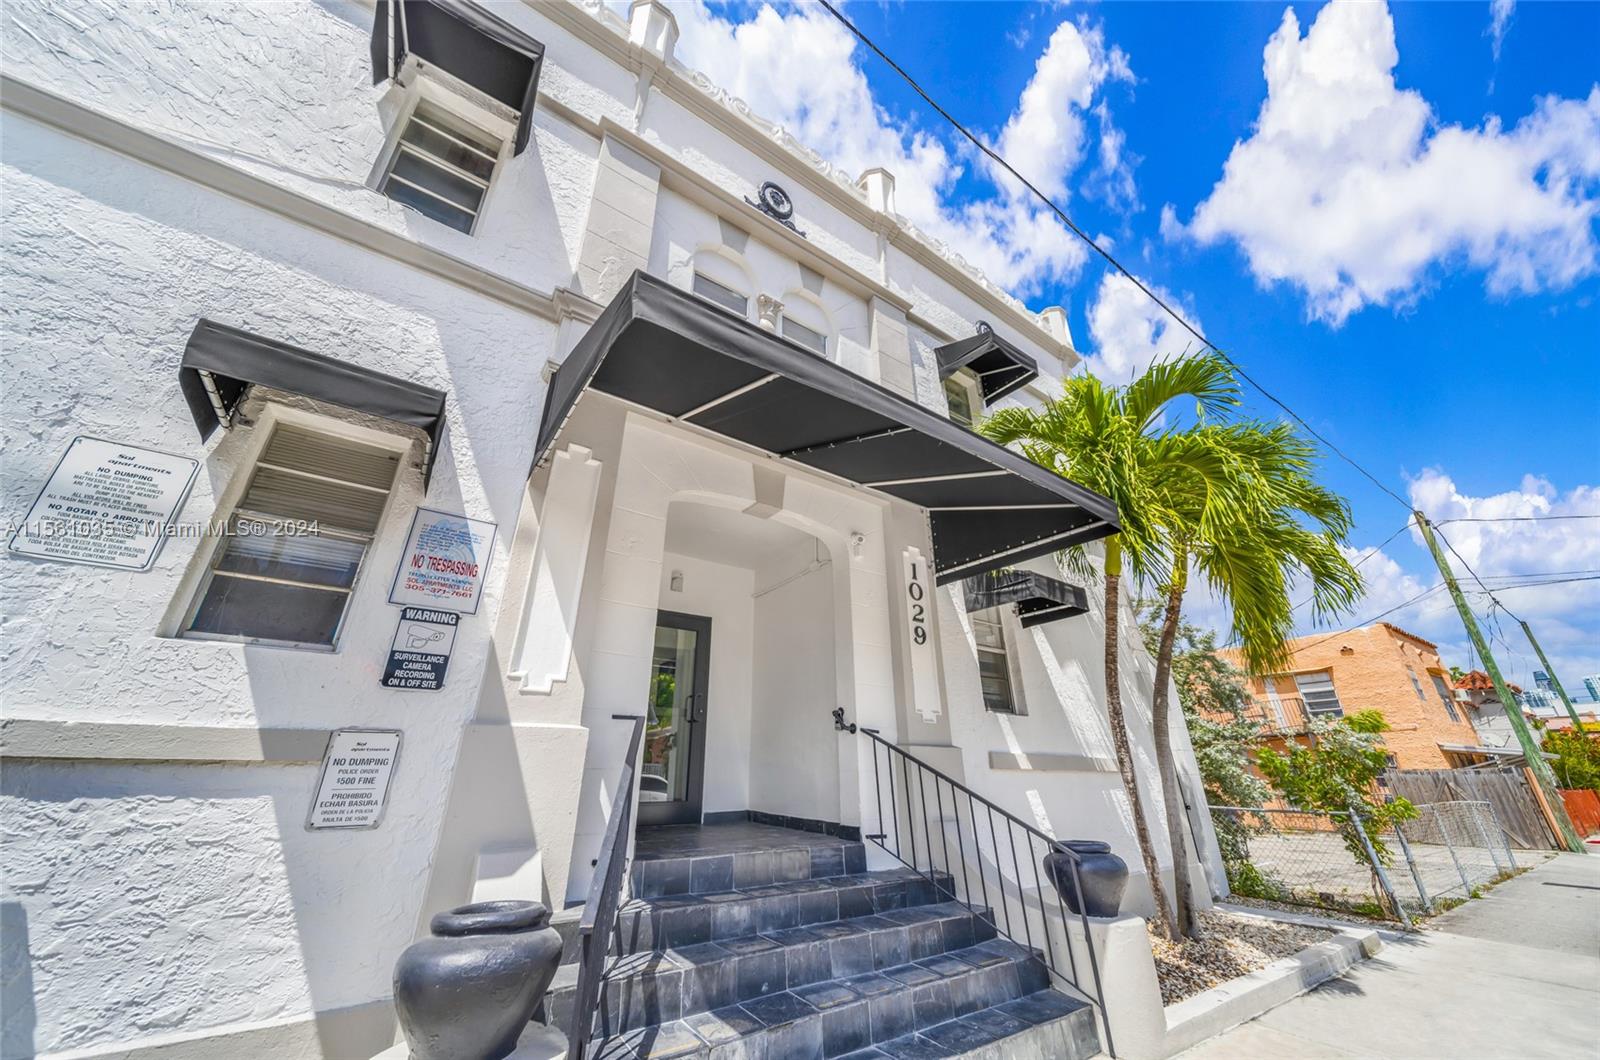 Rental Property at 1029 Sw 5th St, Miami, Broward County, Florida -  - $3,599,000 MO.